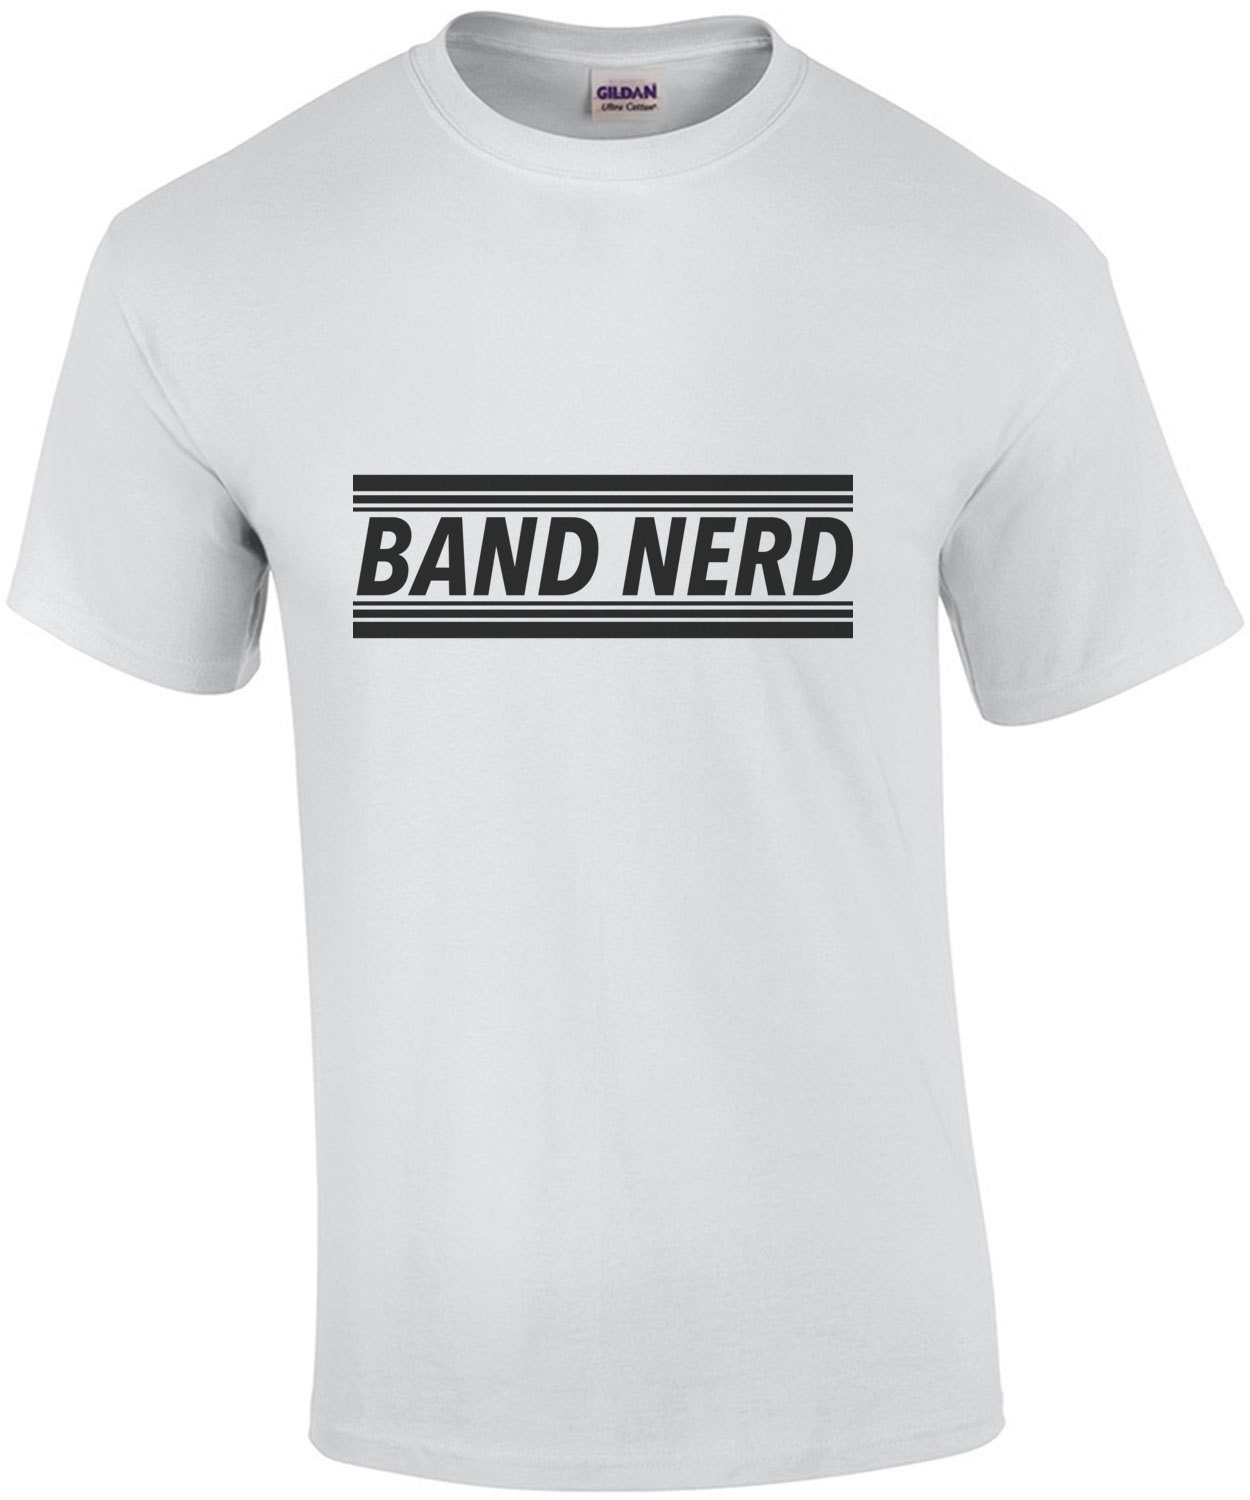 Band Nerd - Funny T-Shirt